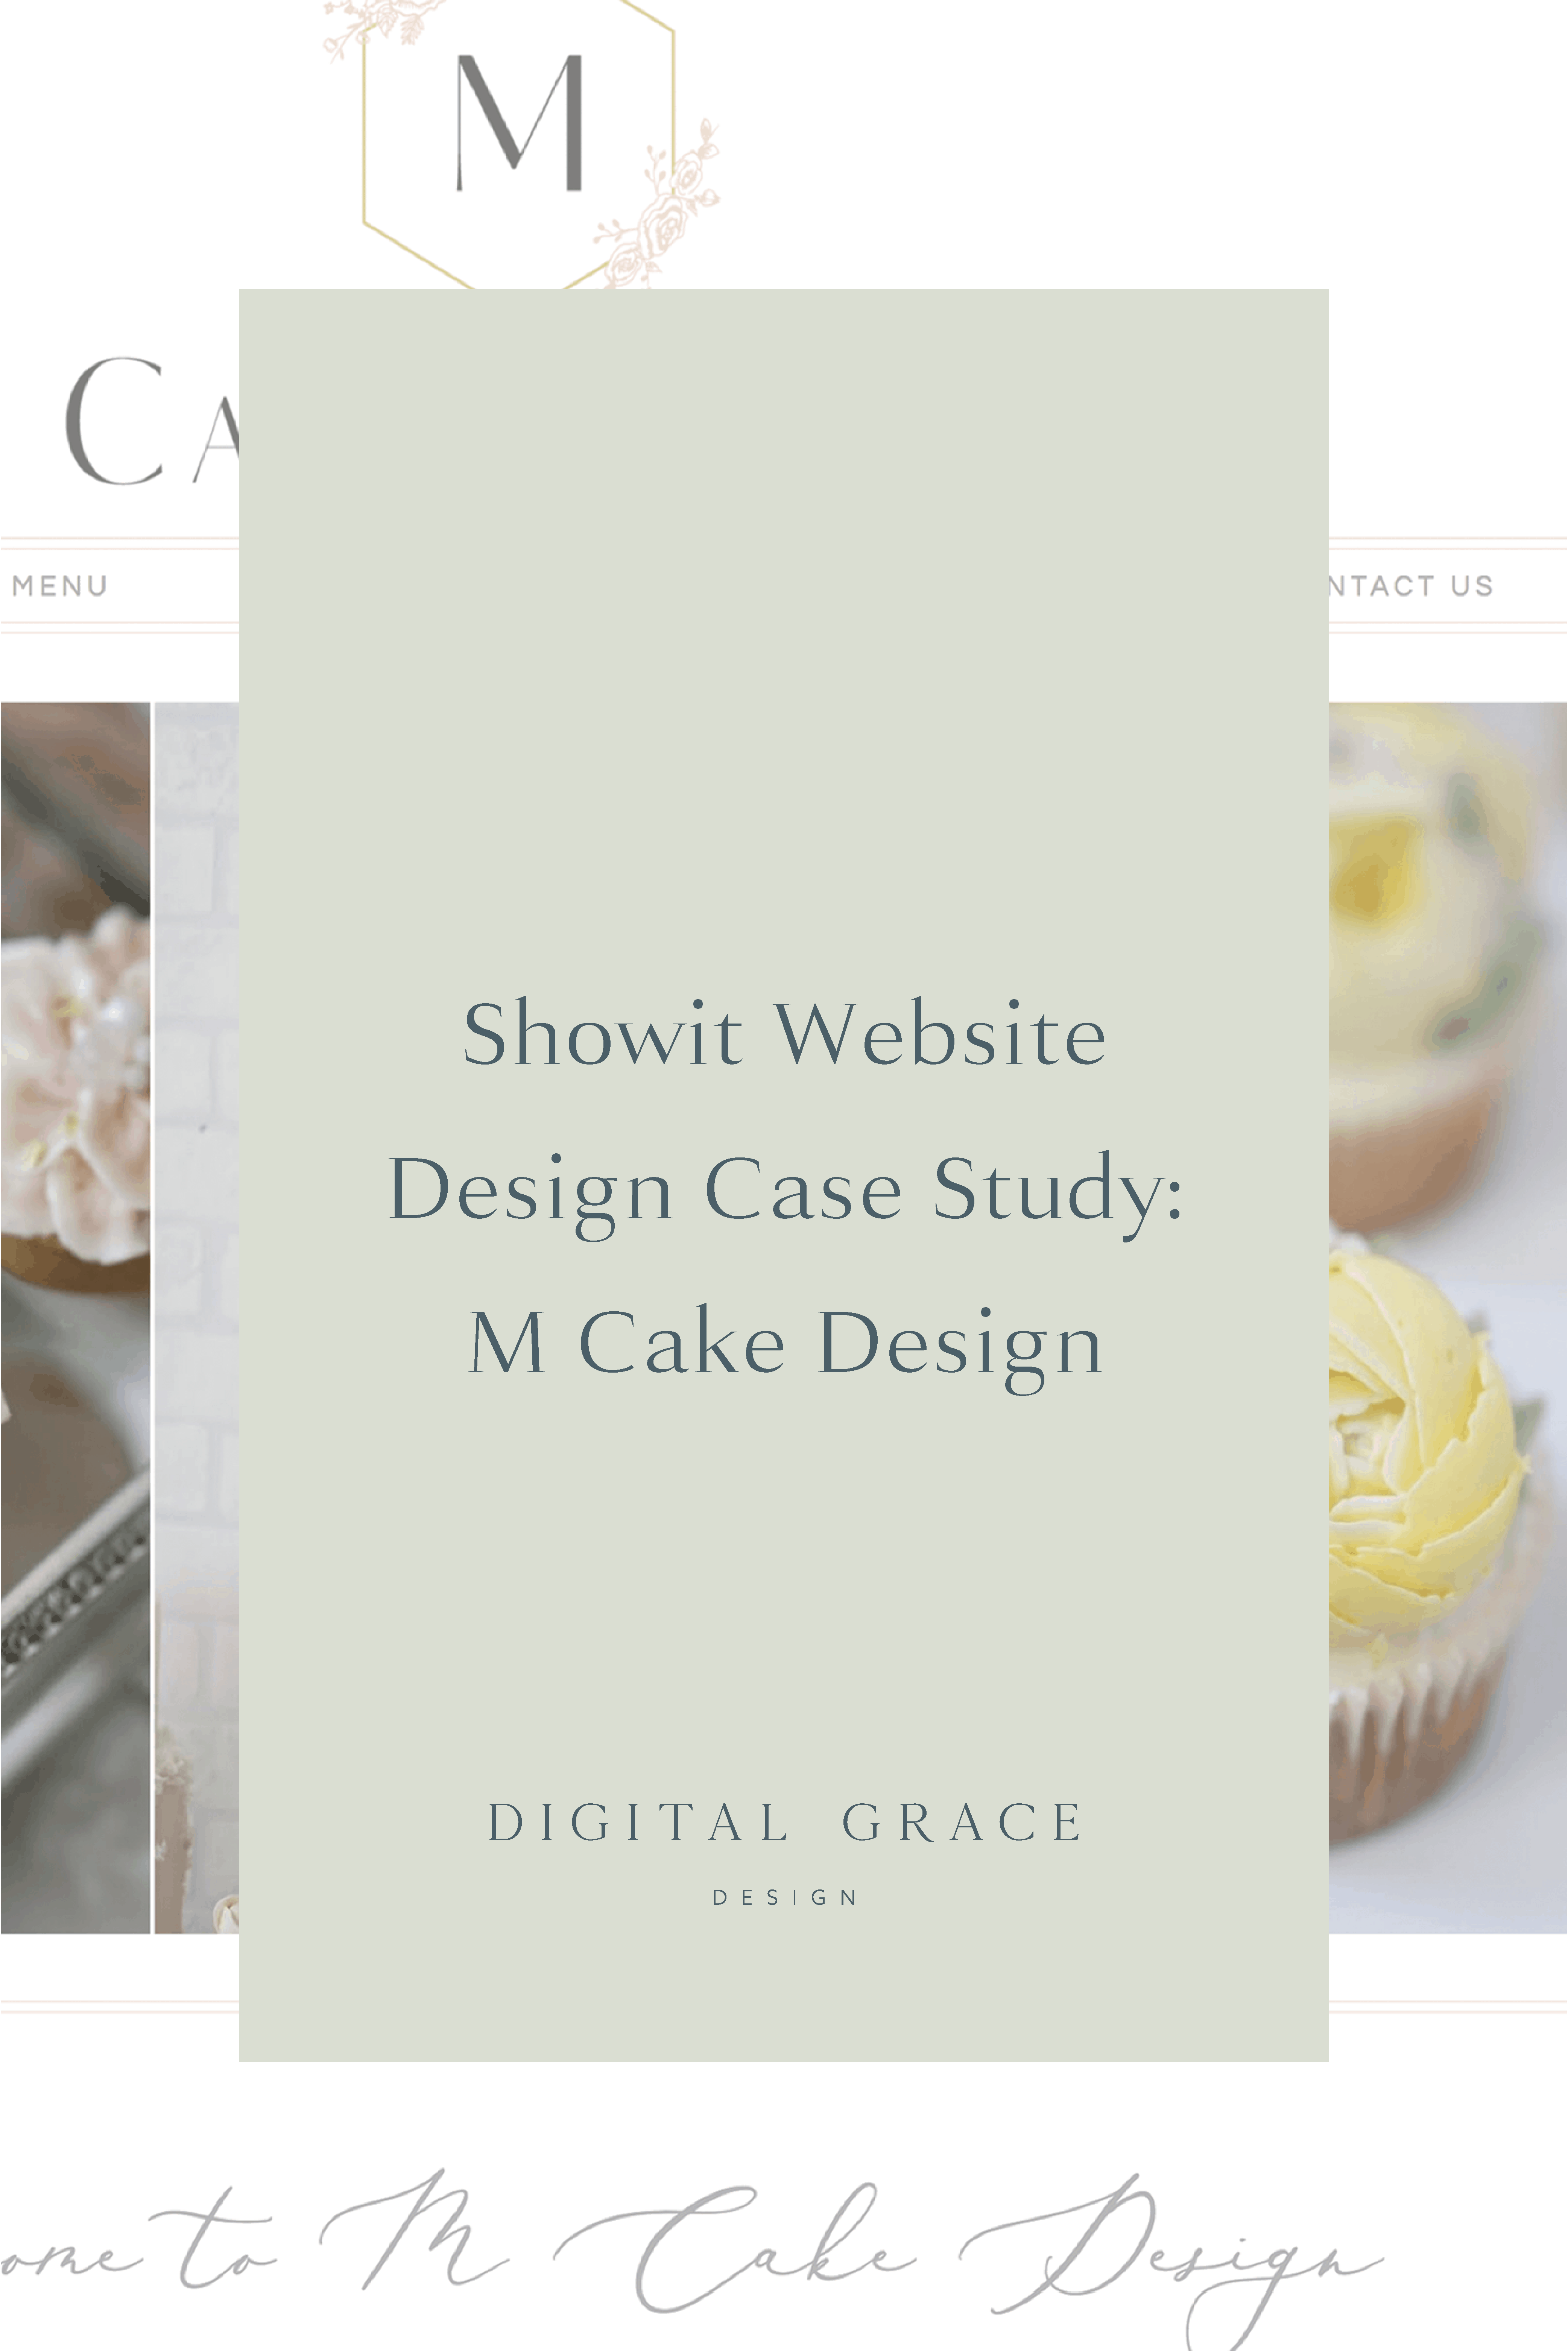 Showit Website of M Cake Design - a Case Study